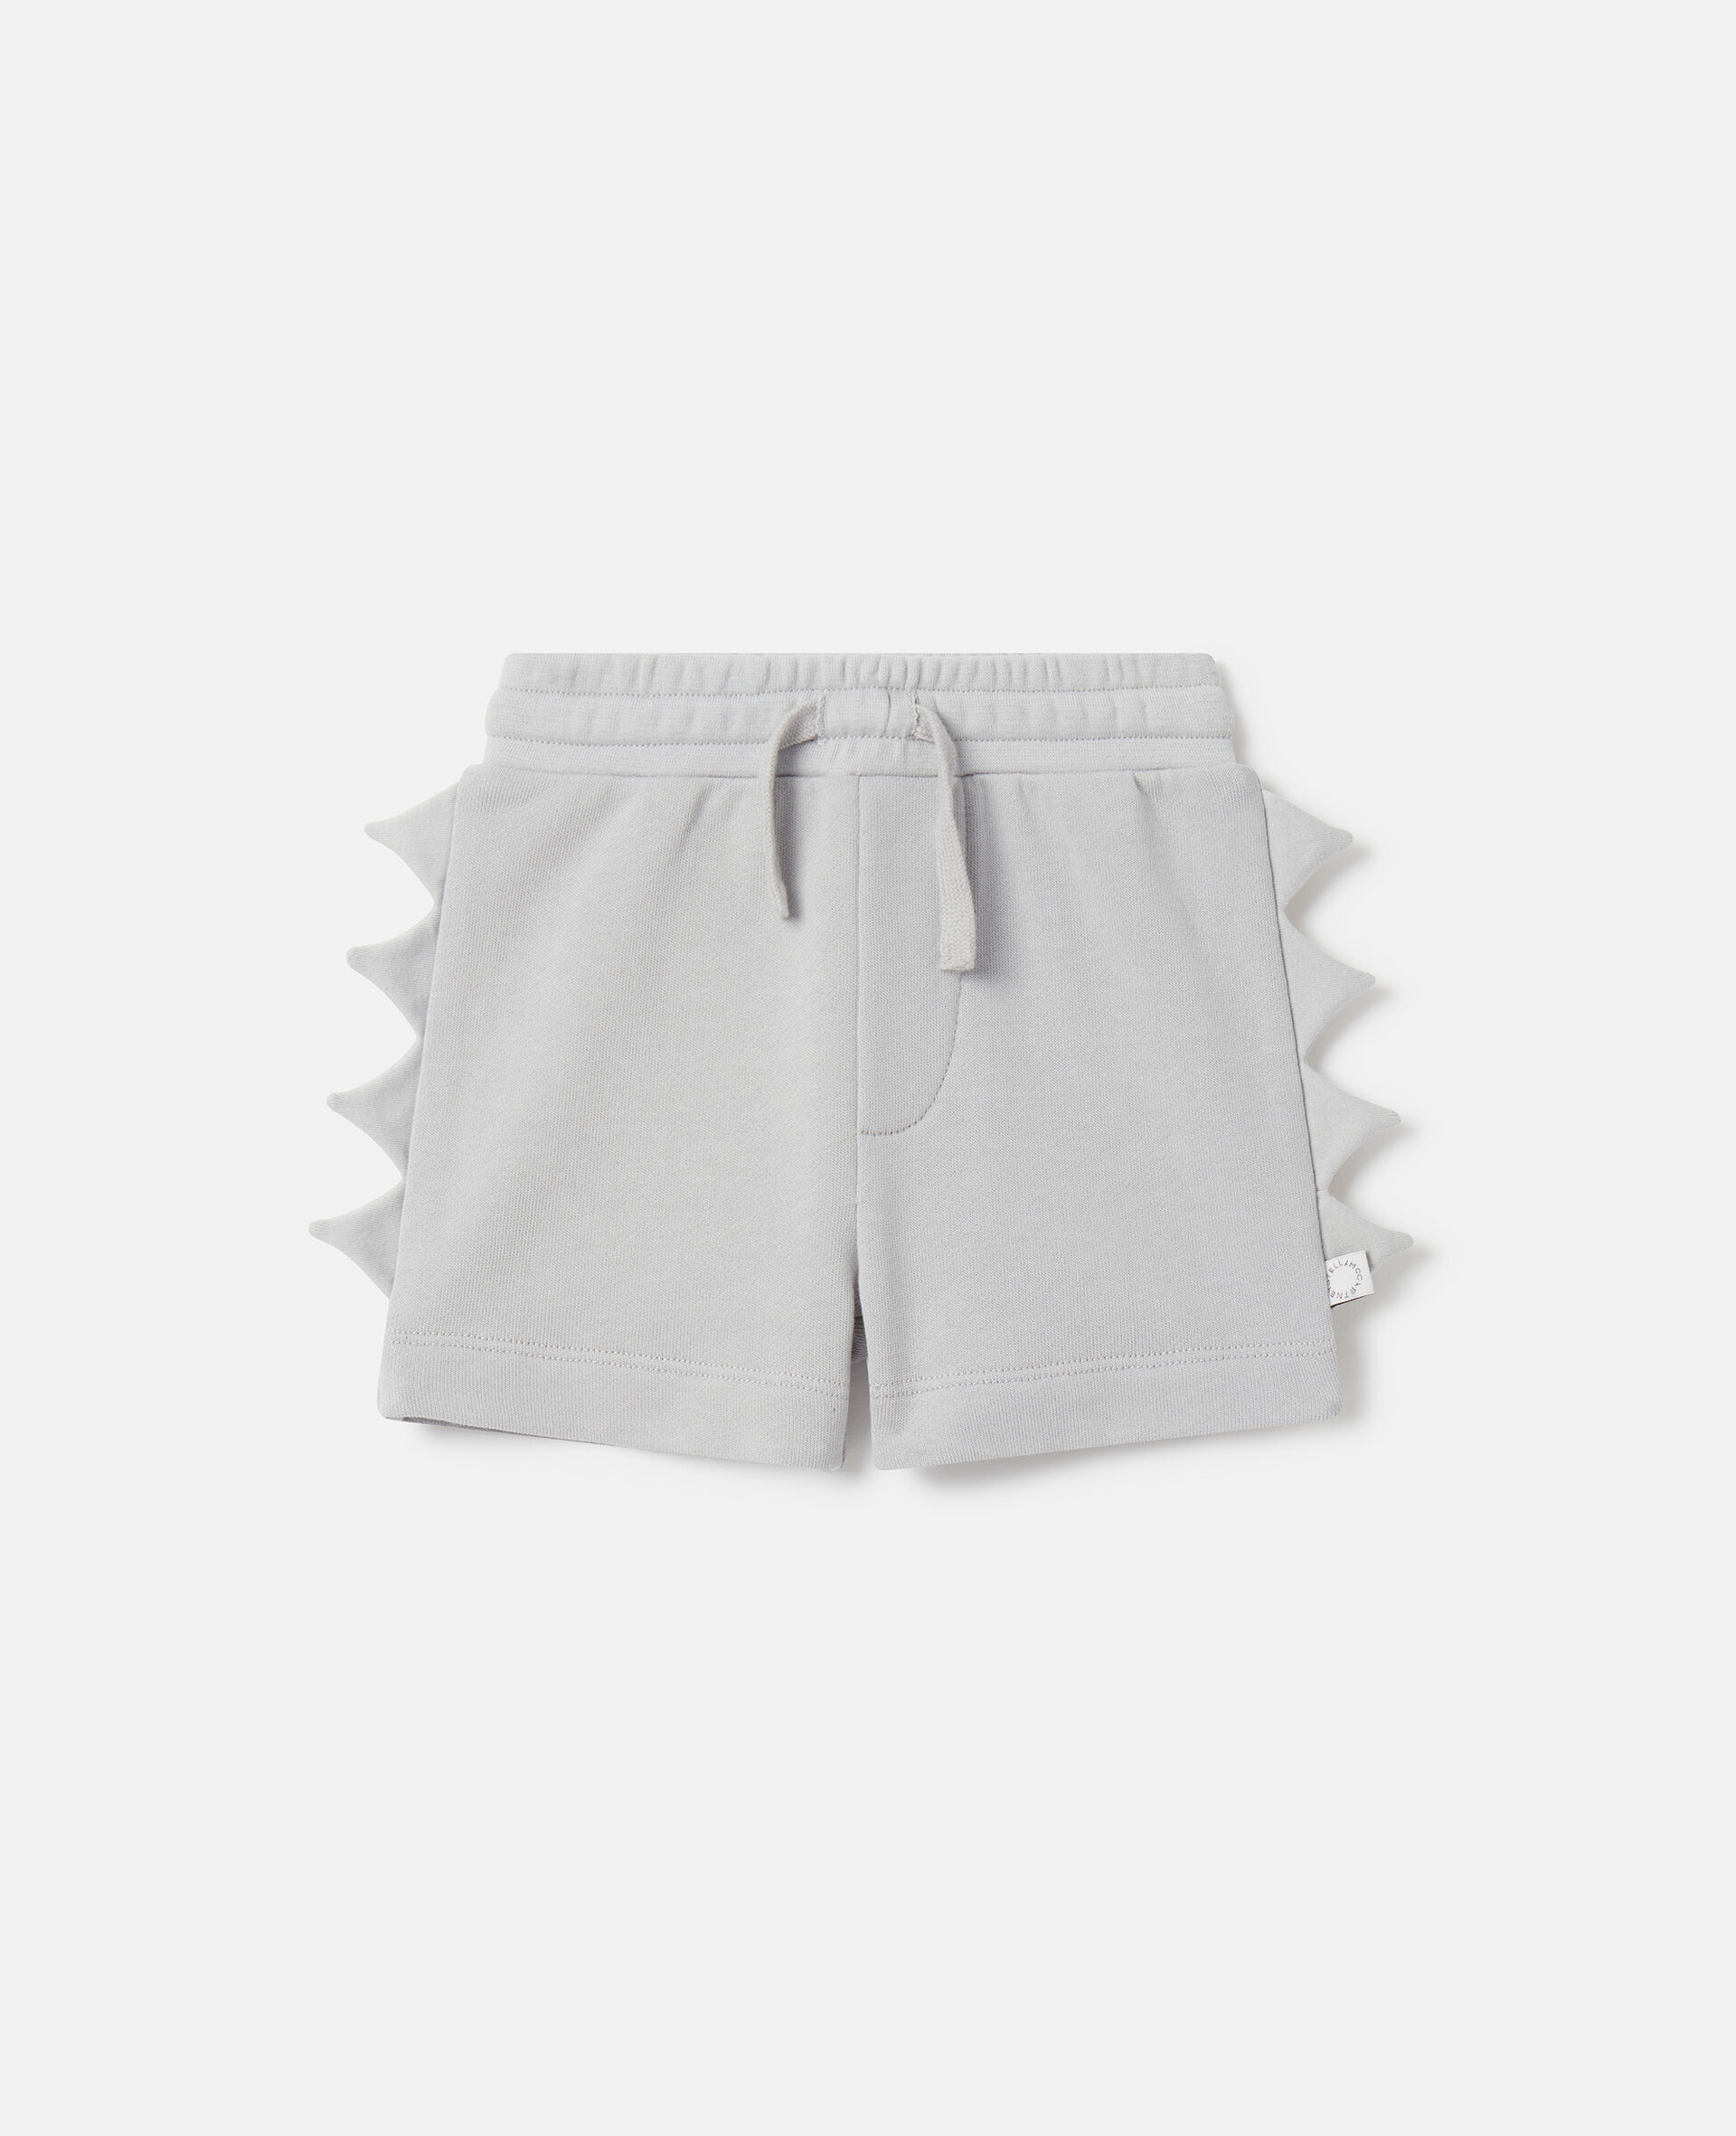 Shark Fin Spike Shorts-灰色-large image number 0